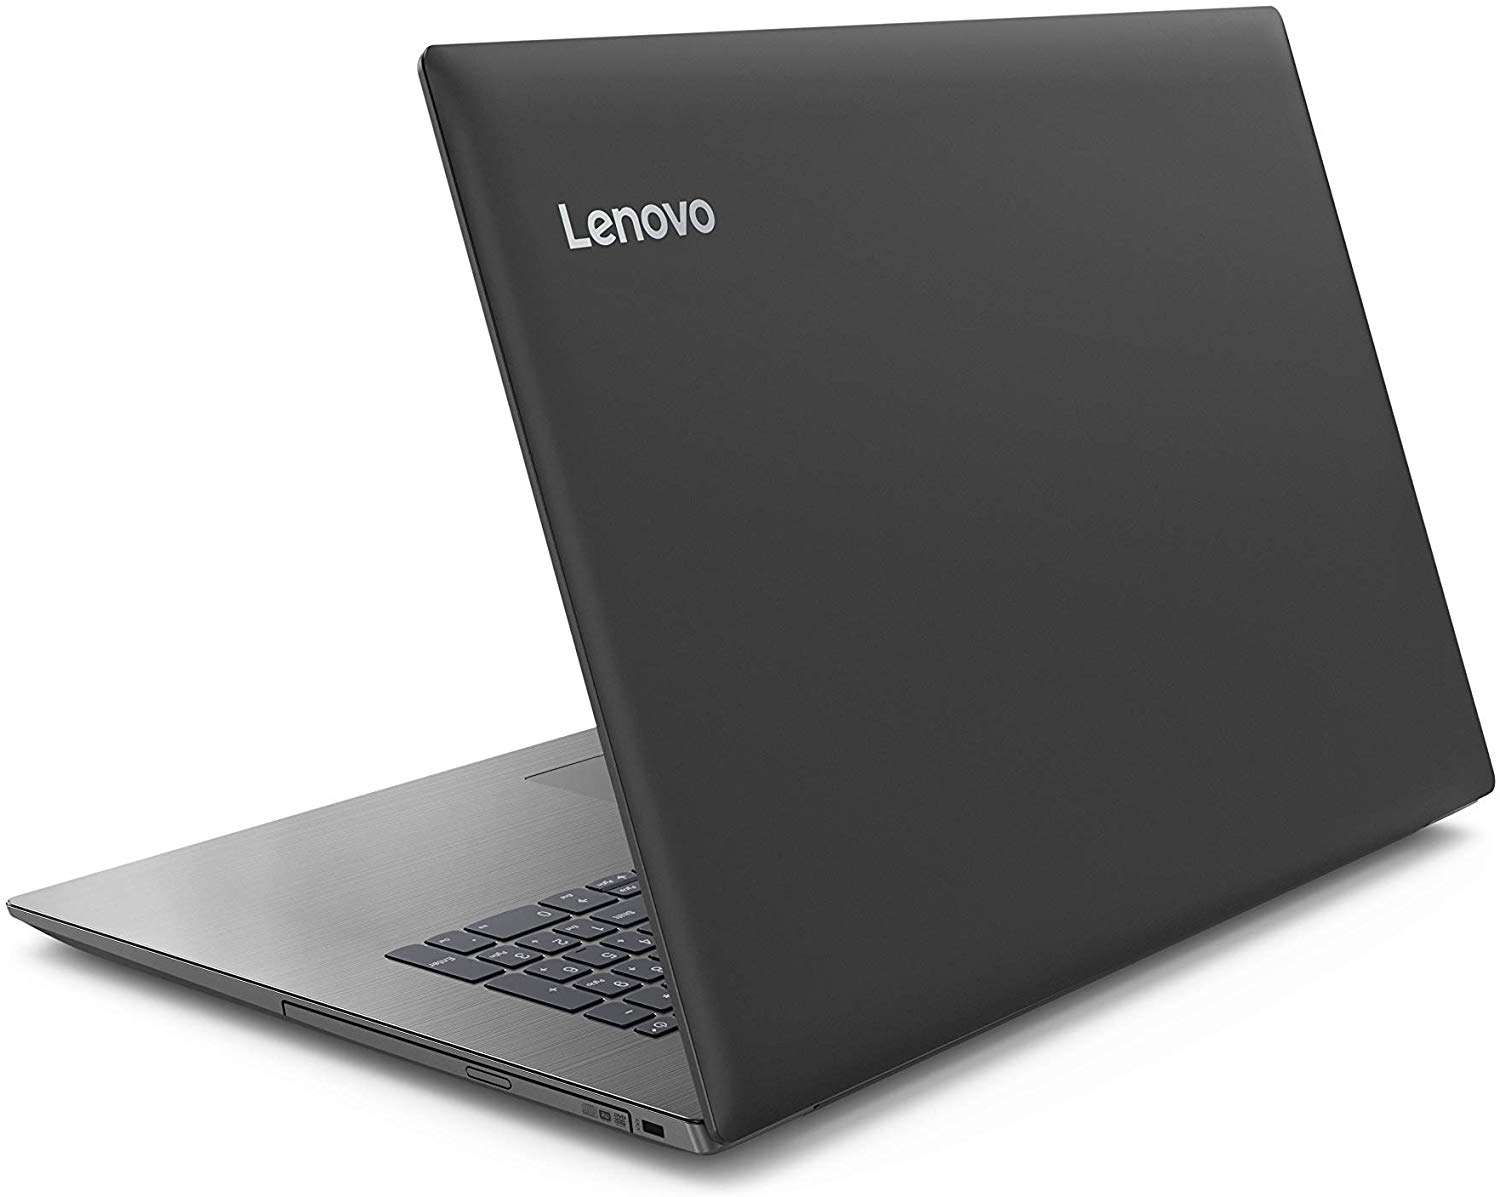 Lenovo Ideapad 330 Laptop With 156 Inch Display Core I3 Processor4gb